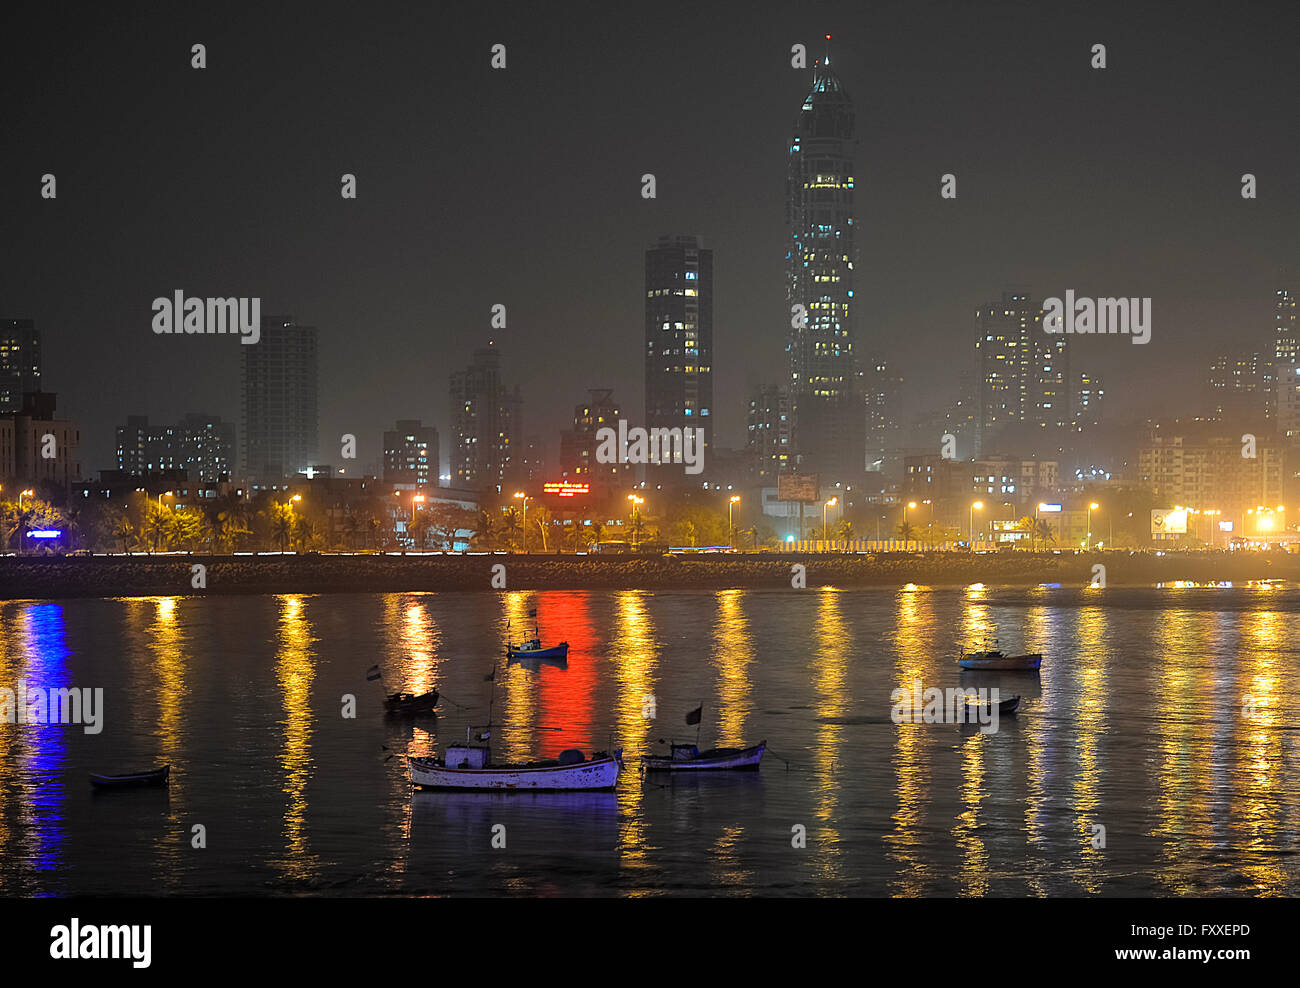 India Mumbai Bombay smog Foto Stock